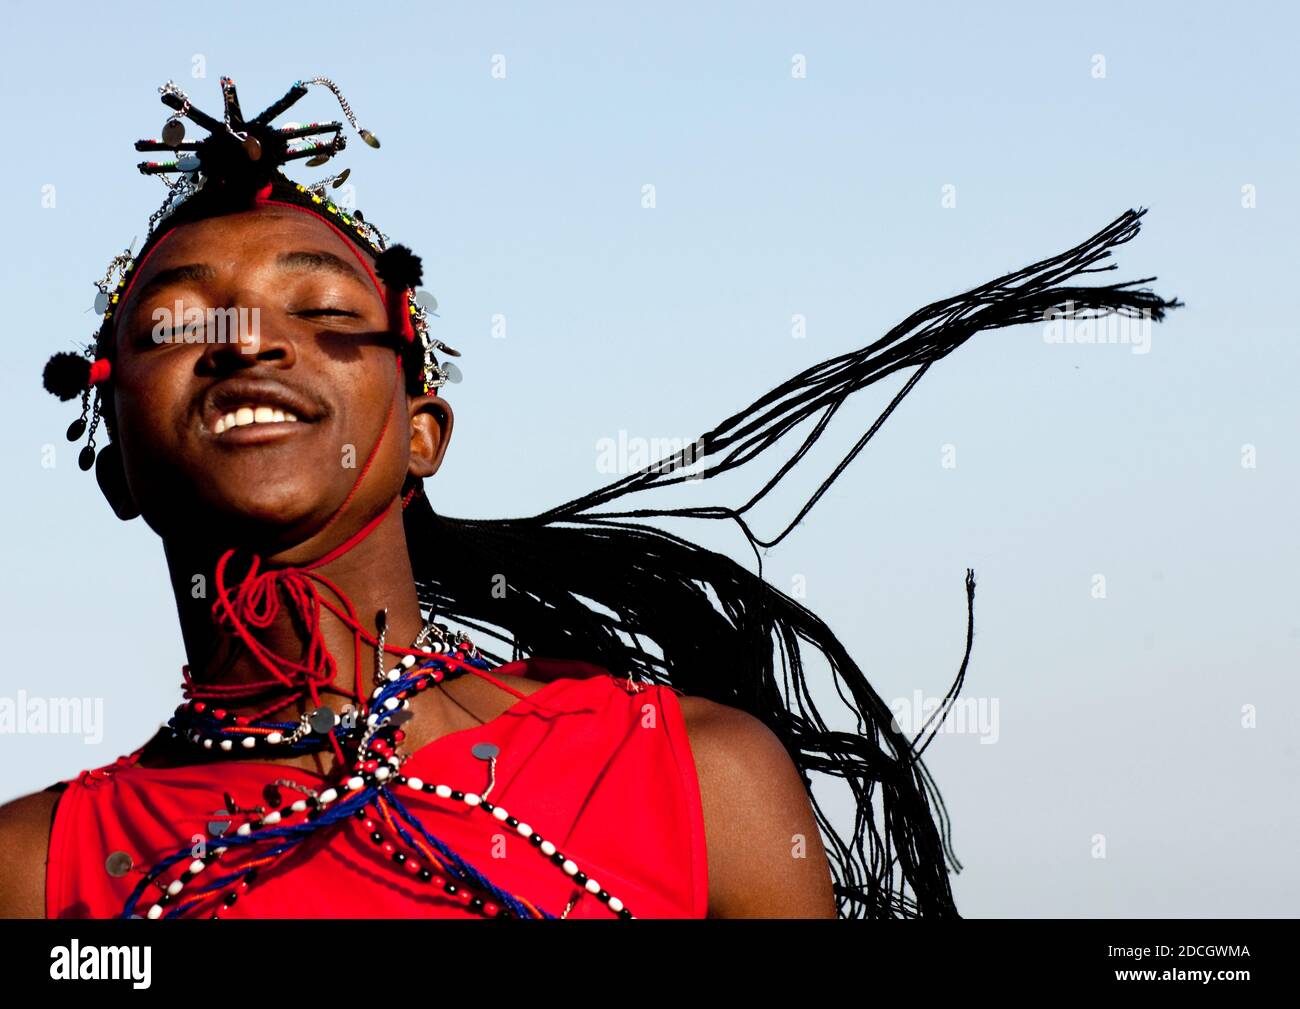 Portrait of a Maasai tribe man, Rift Valley Province, Maasai Mara, Kenya Stock Photo